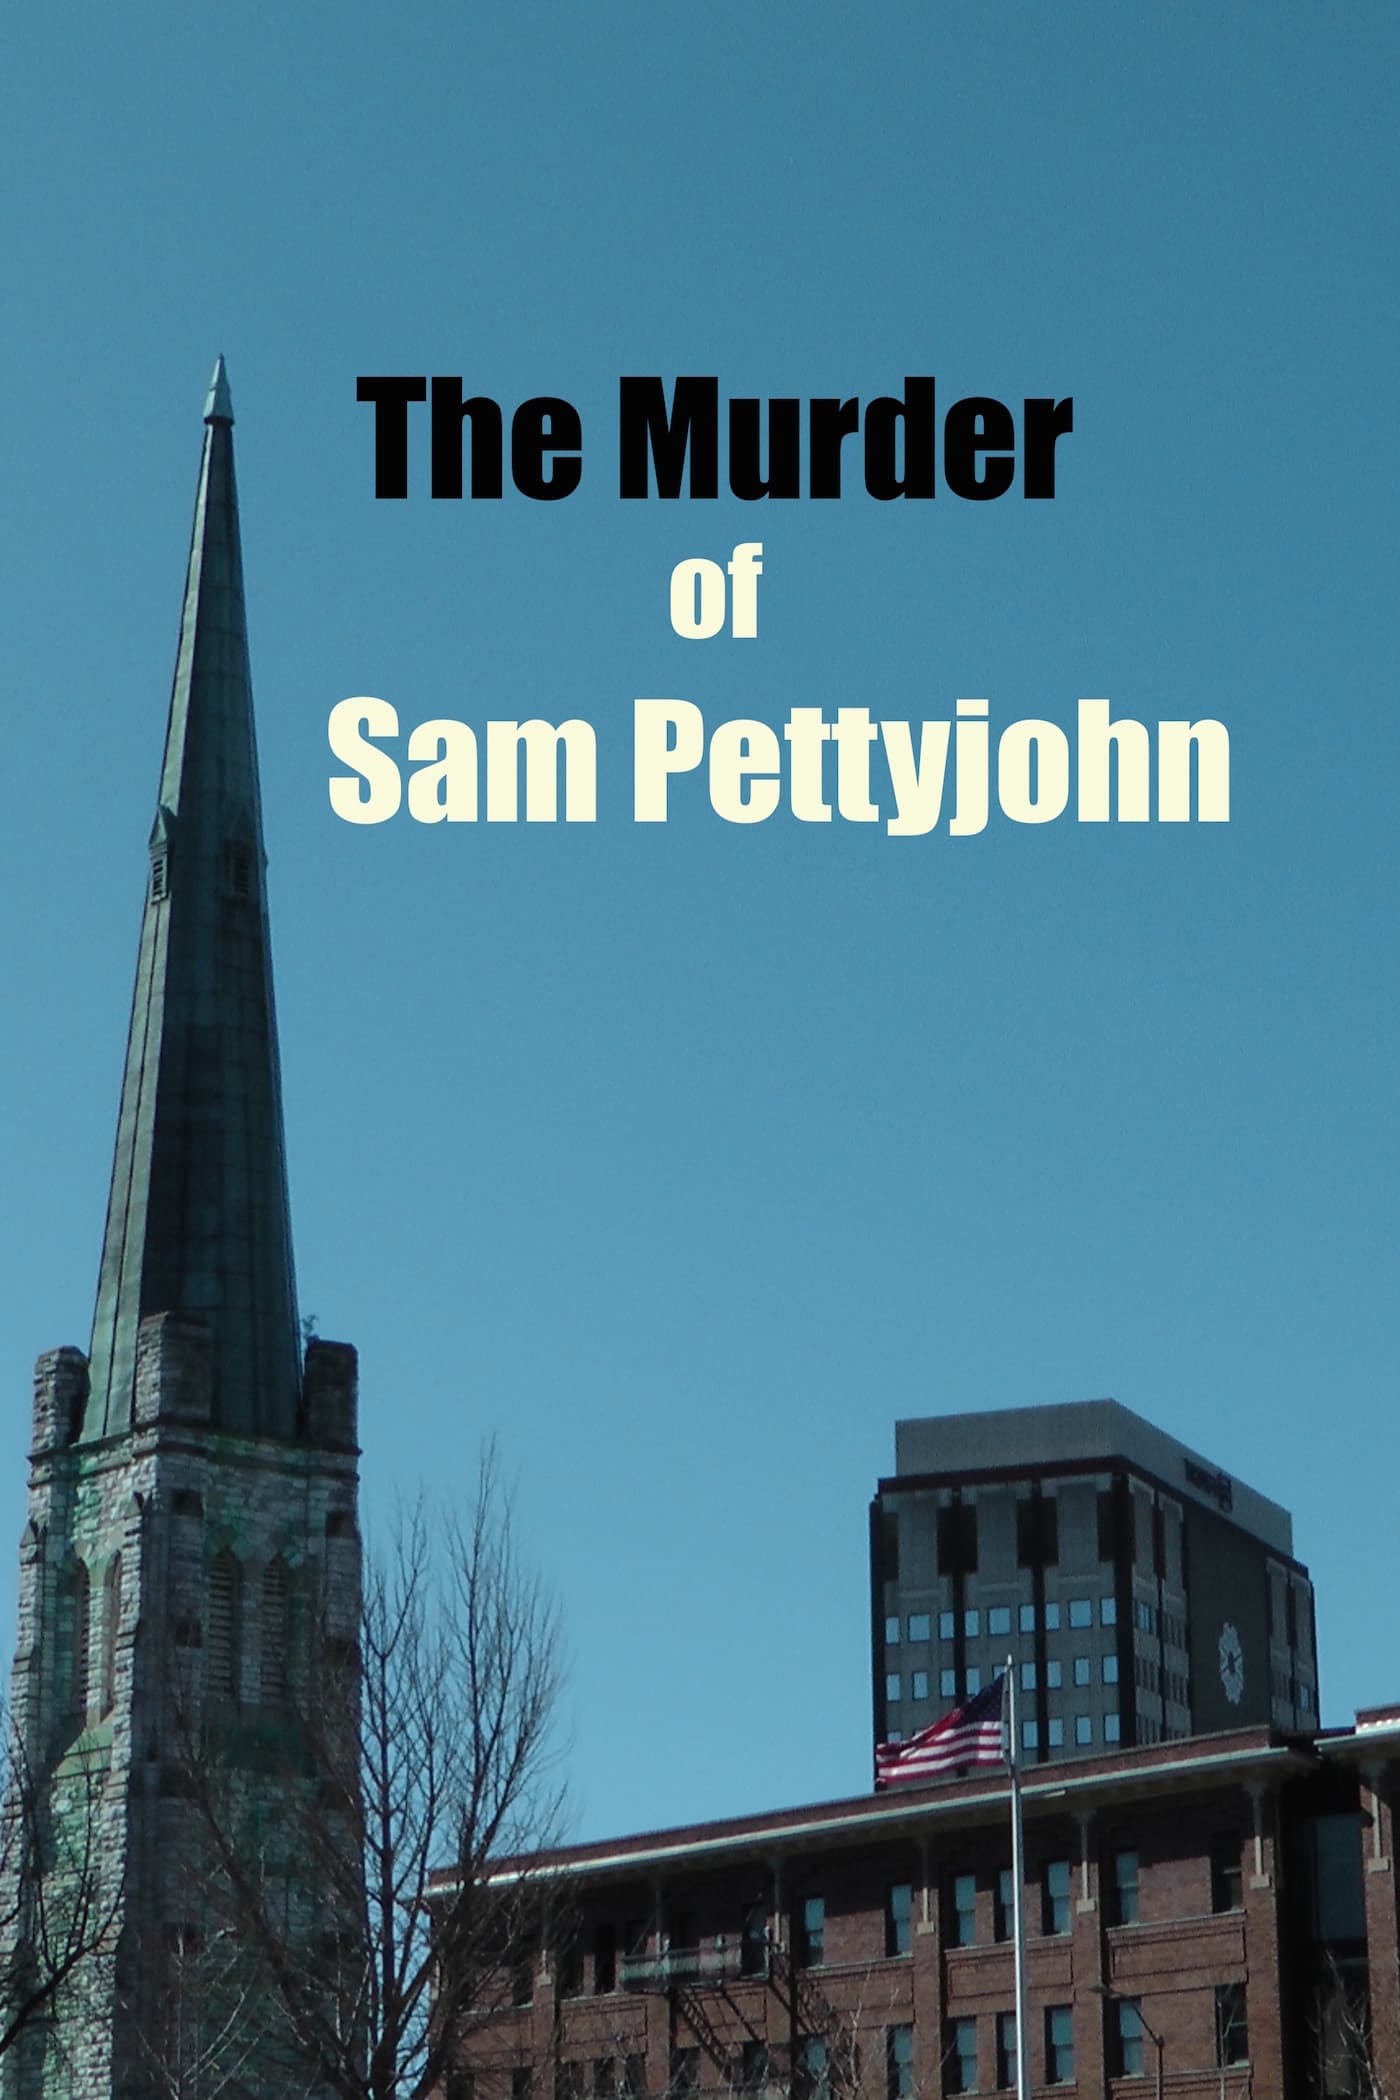 The Murder of Sam Pettyjohn